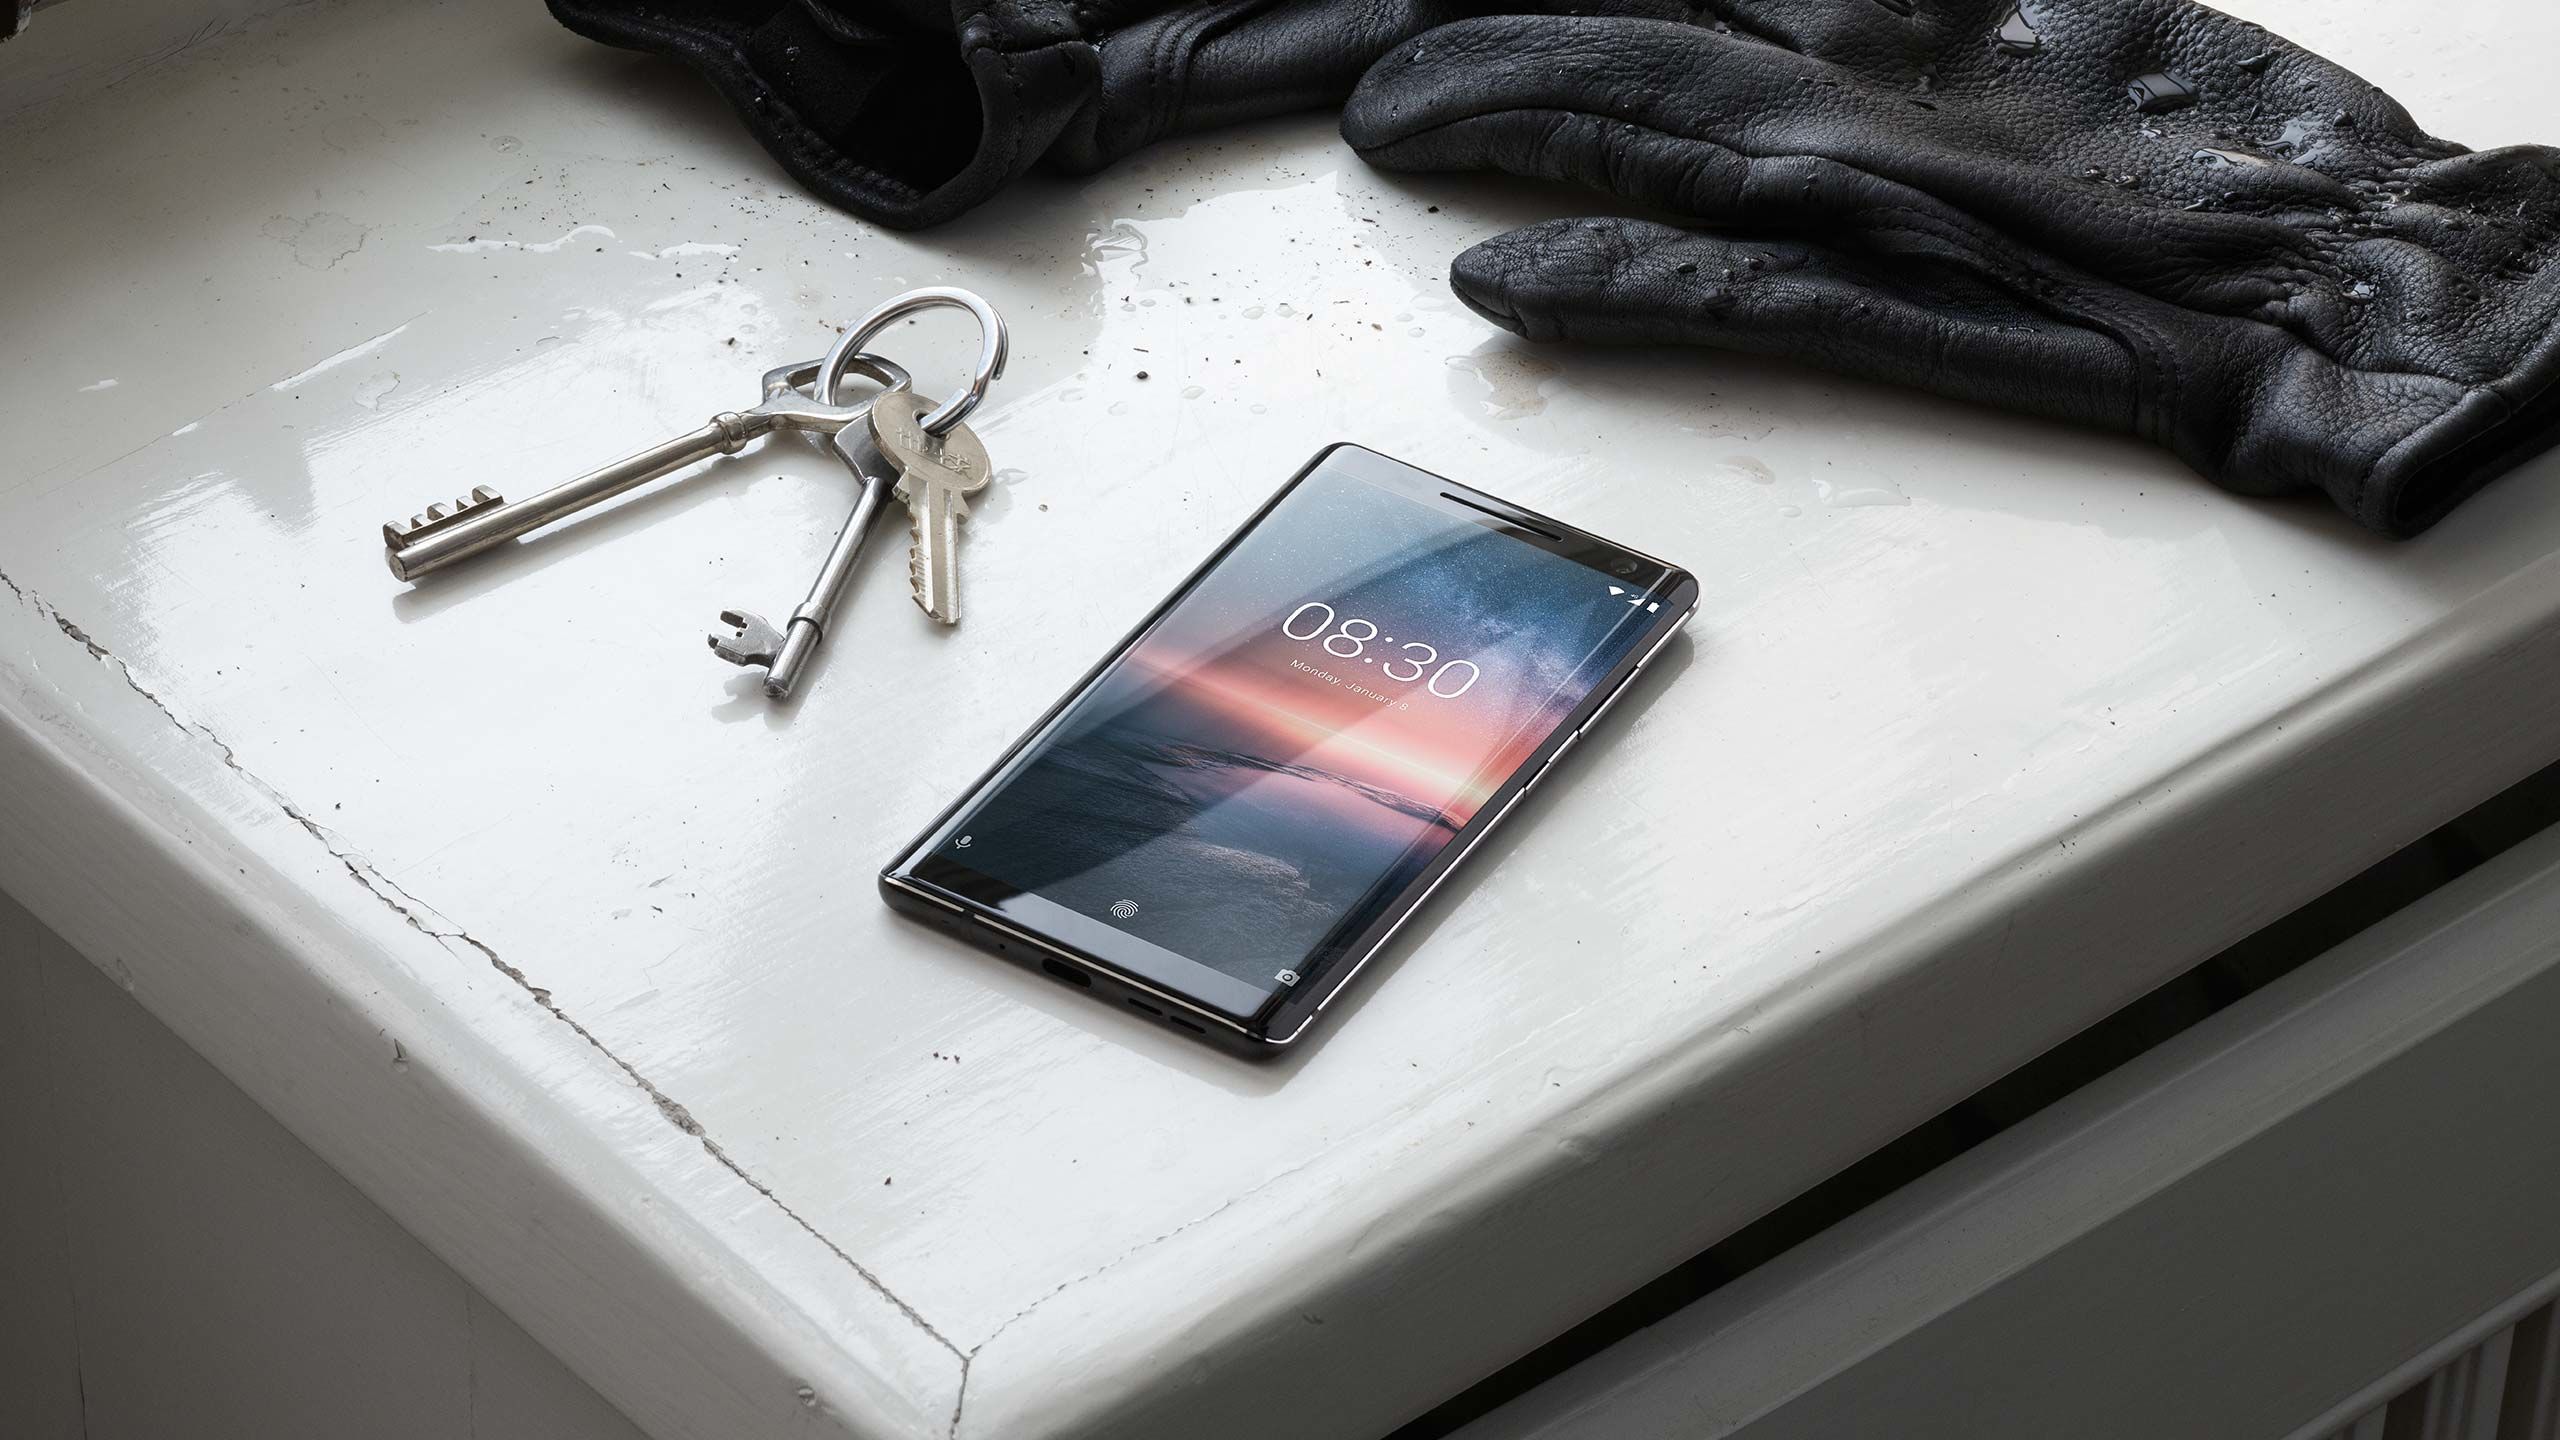 Nokia 8 Sirocco: цена, обзор, характеристики и фото новинки